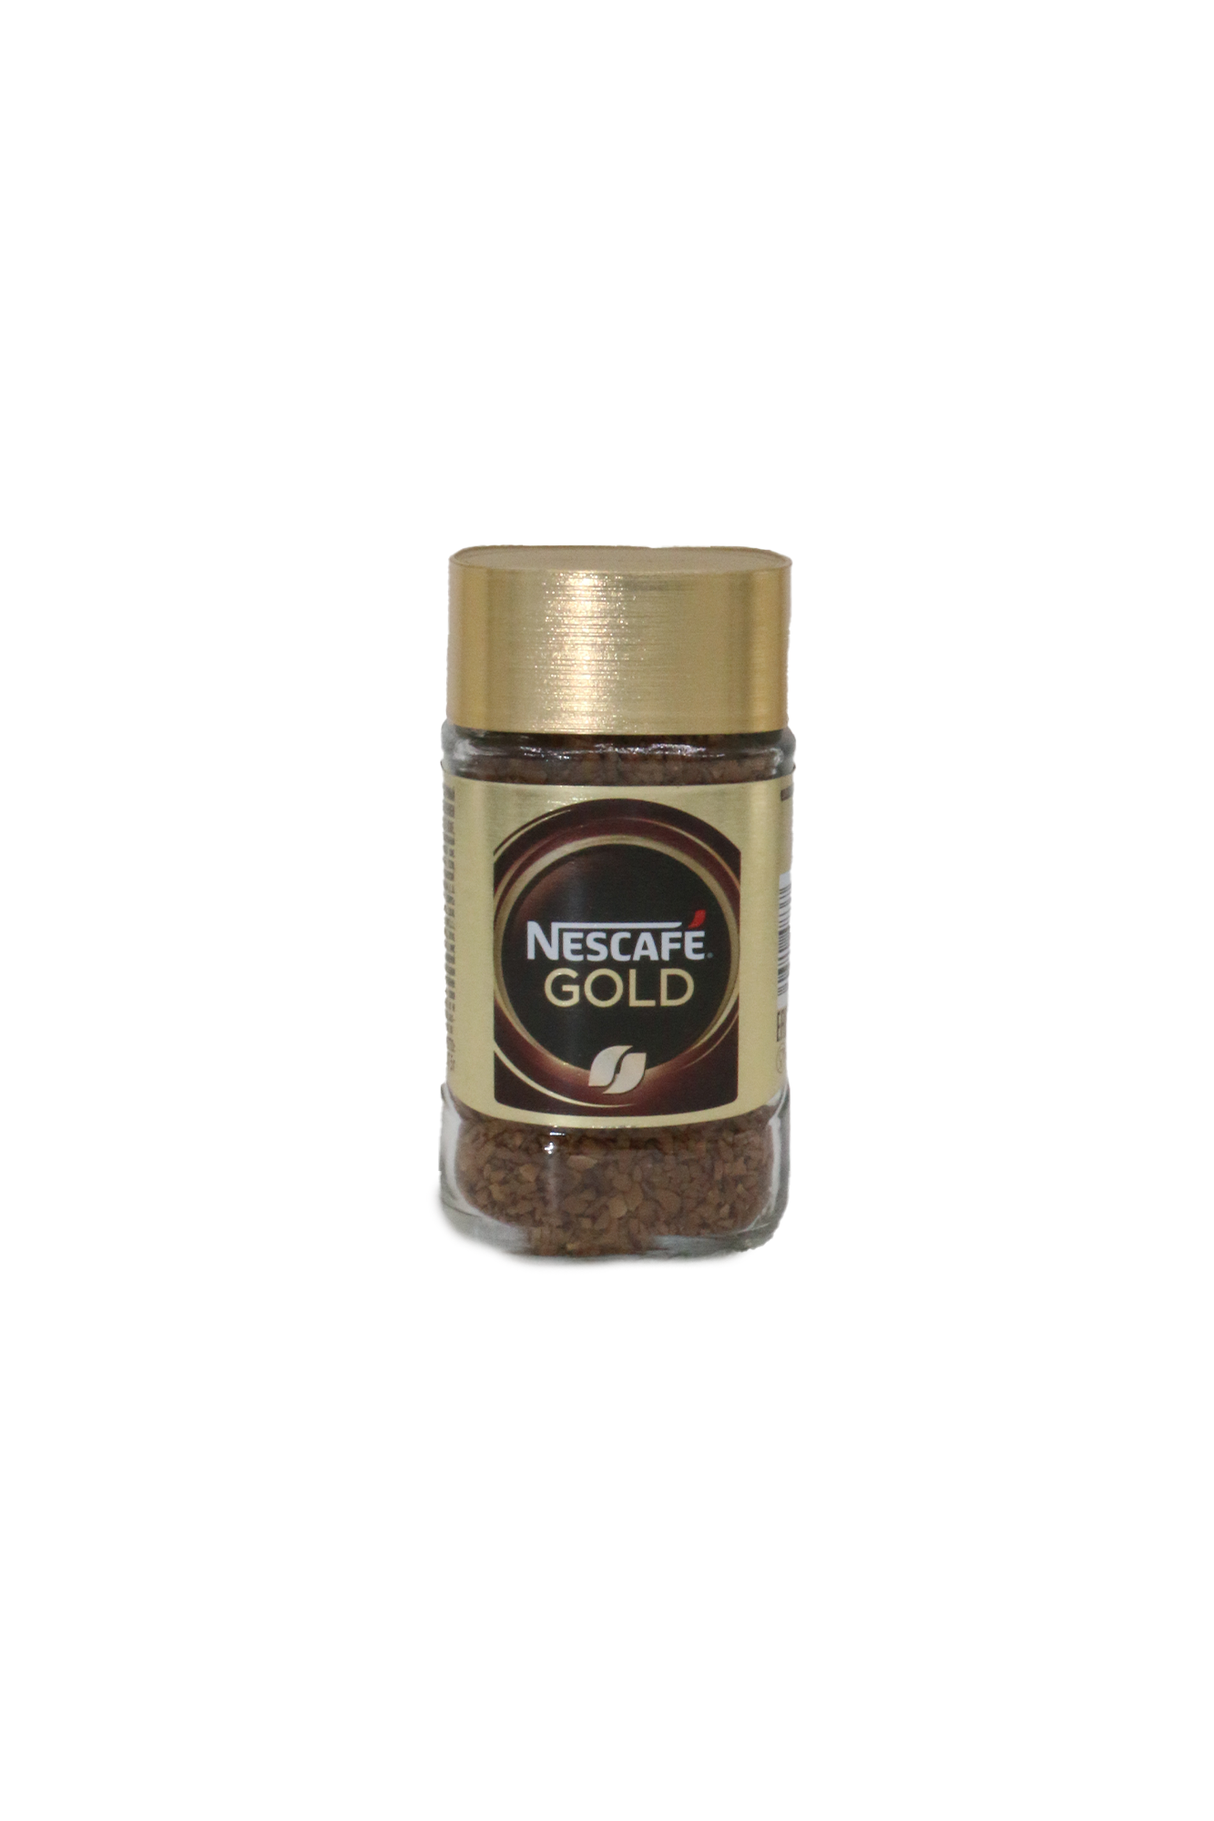 nescafe coffee gold 47.5g